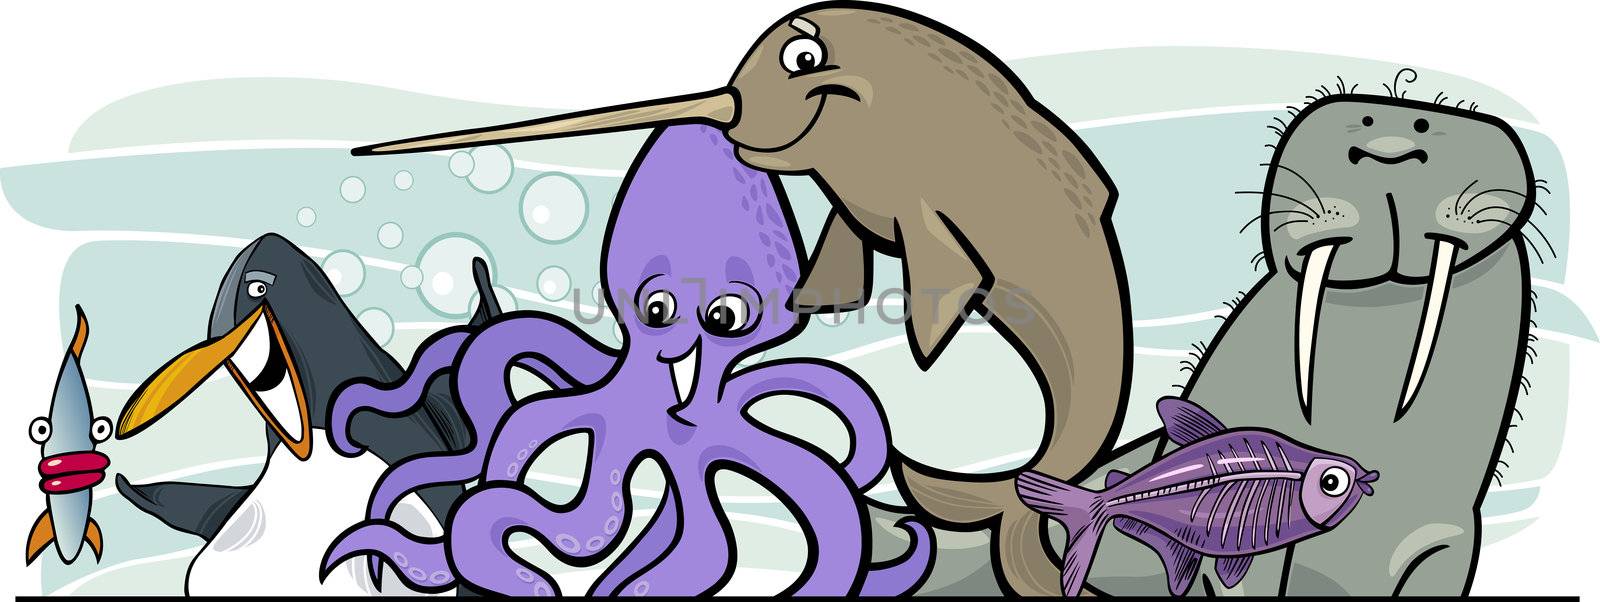 Cartoon sea life animals design by izakowski